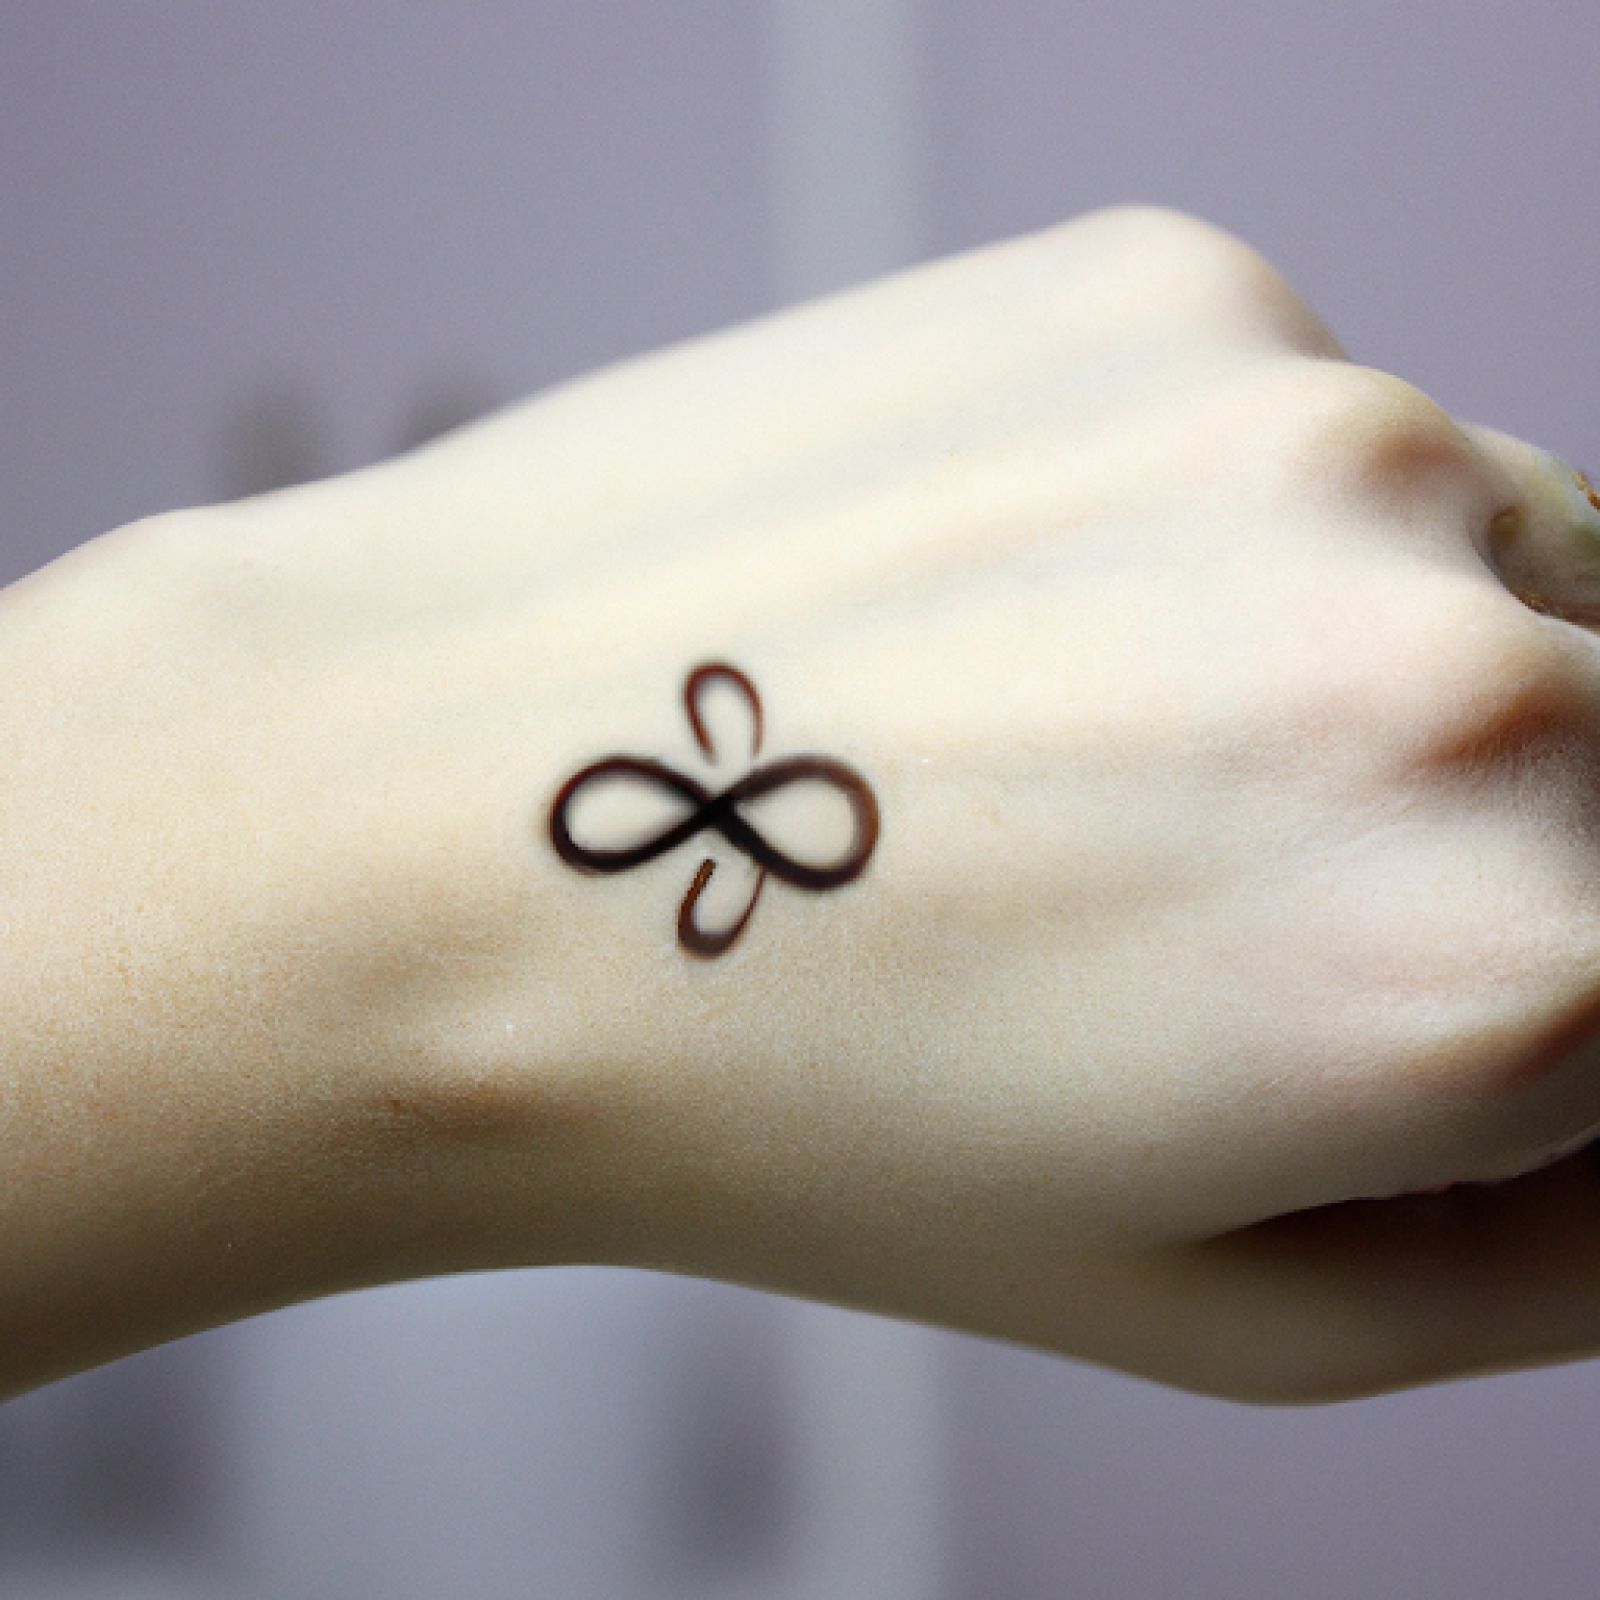 Infinity tattoo on wrist for women